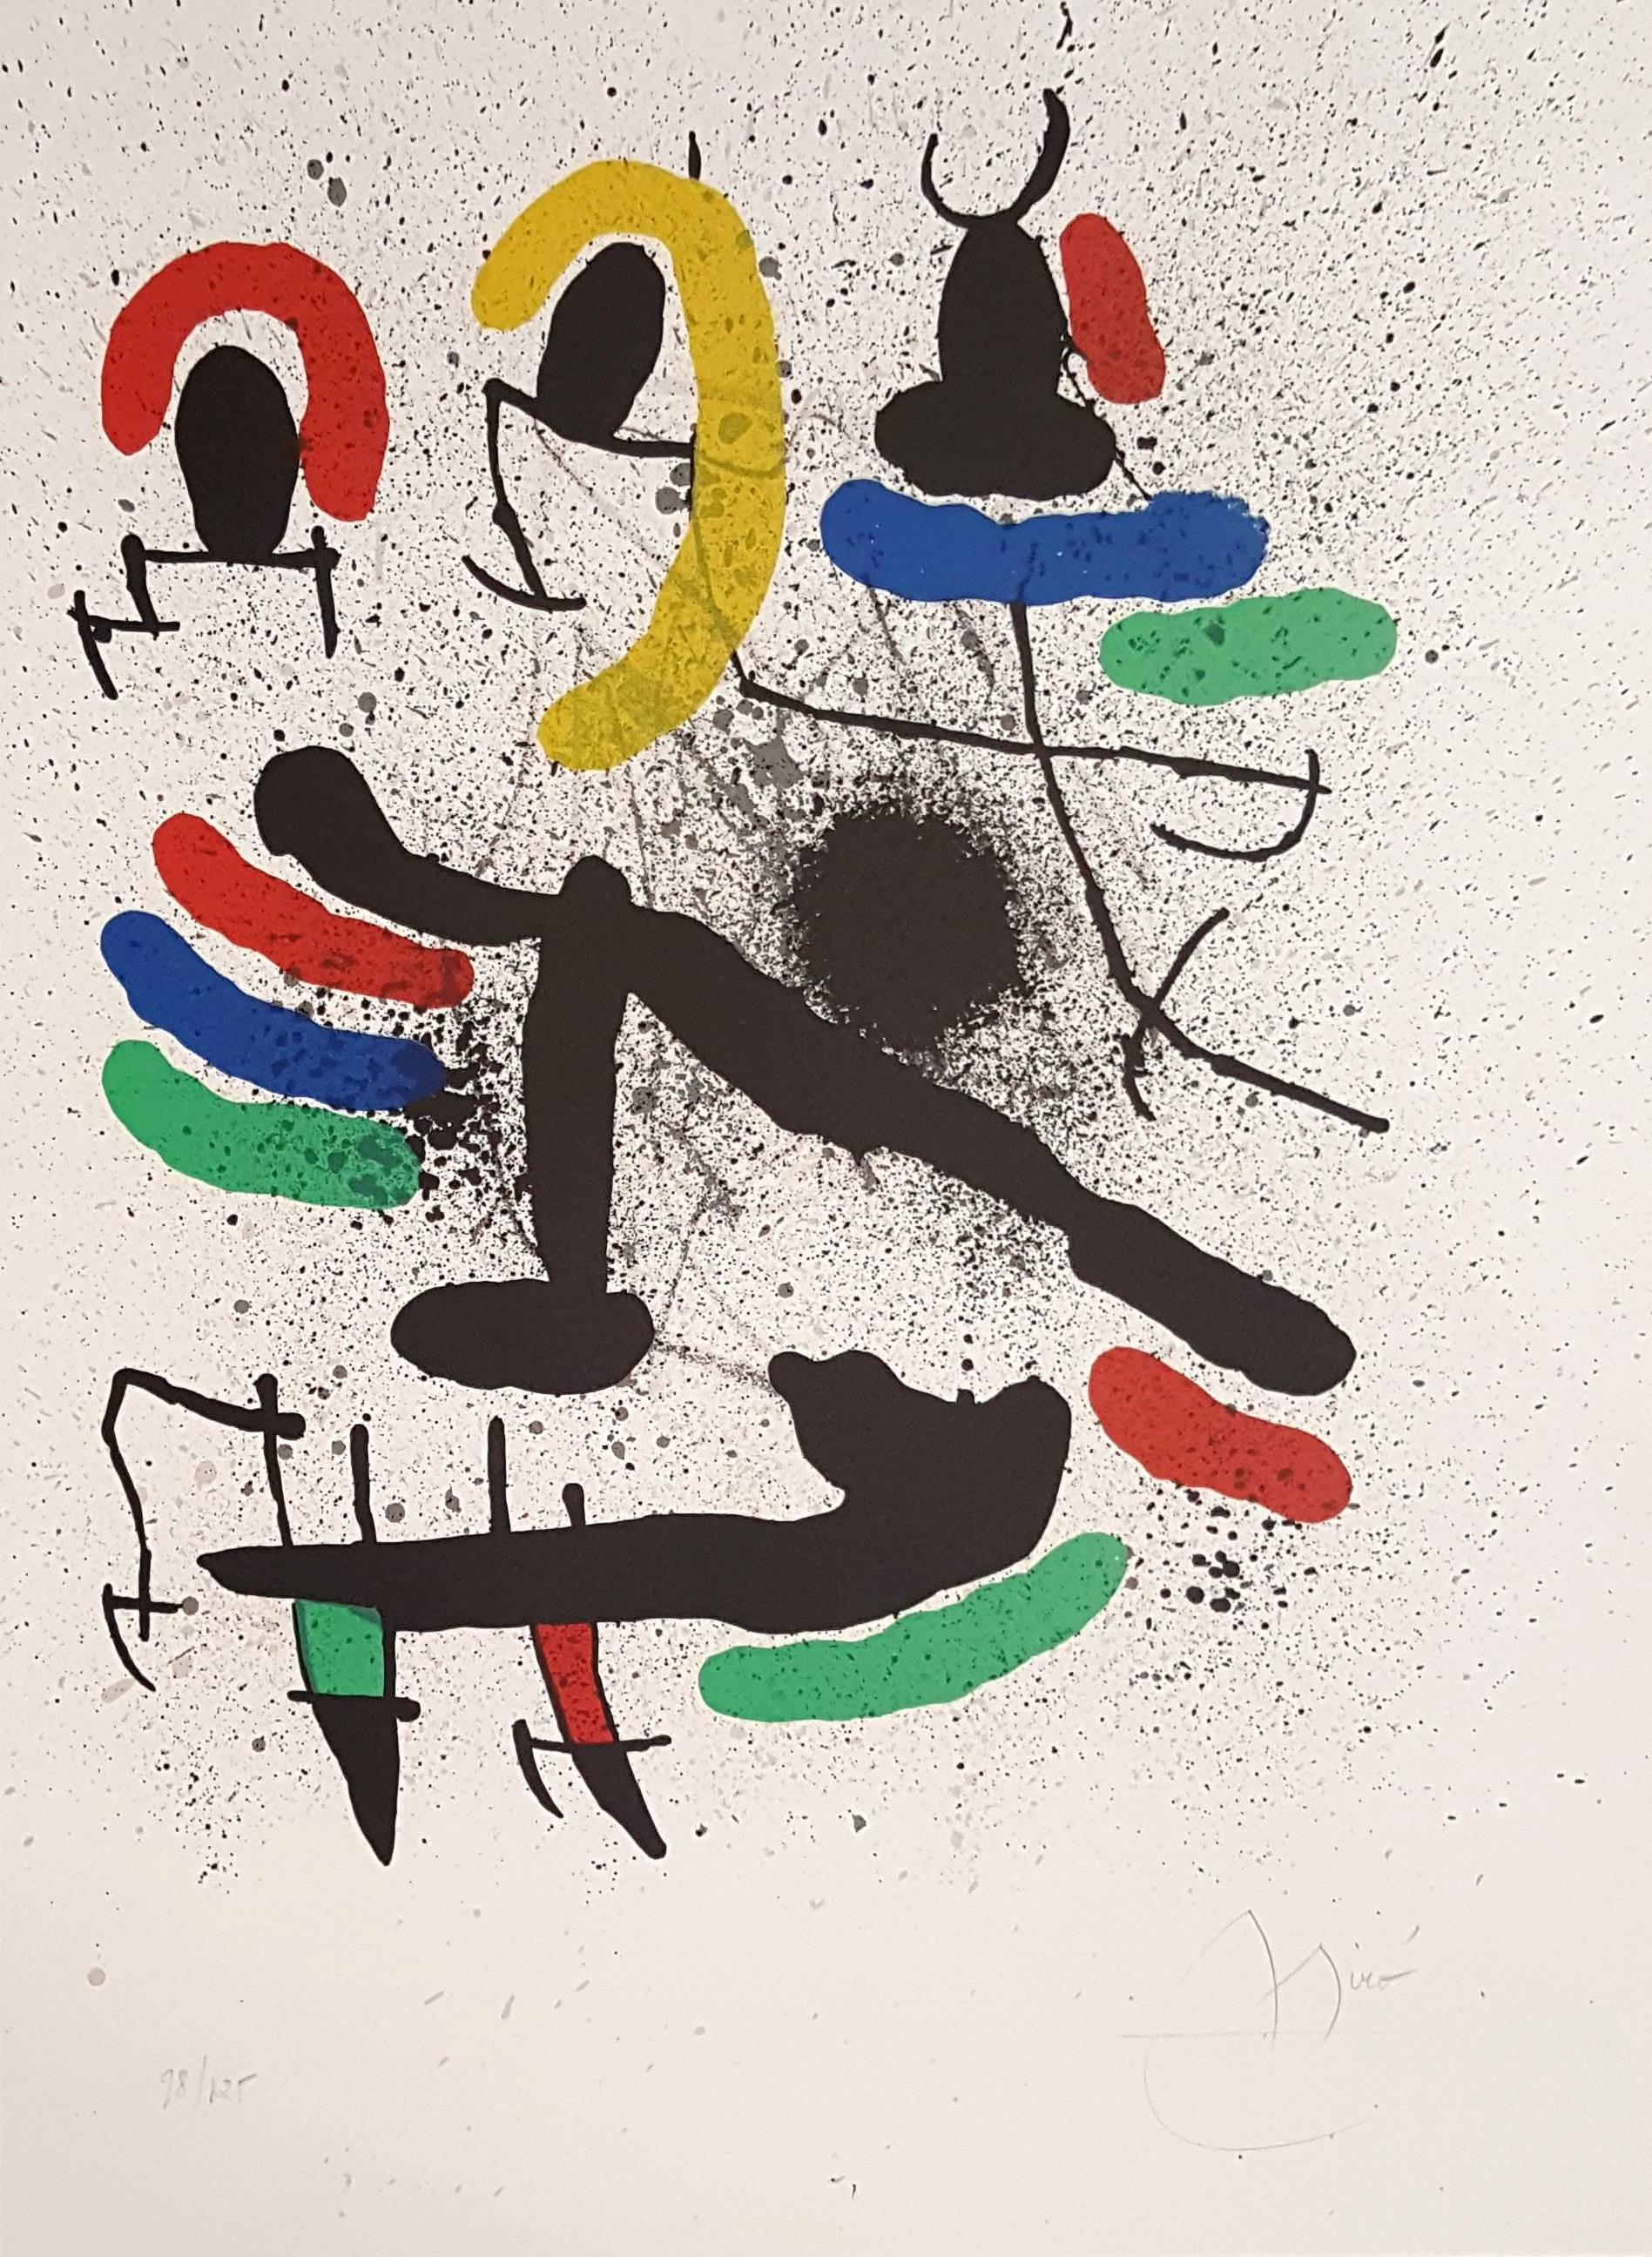 Joan Miró Abstract Print - Liberty of Liberties - Original Lithograph Handsigned and Numbered